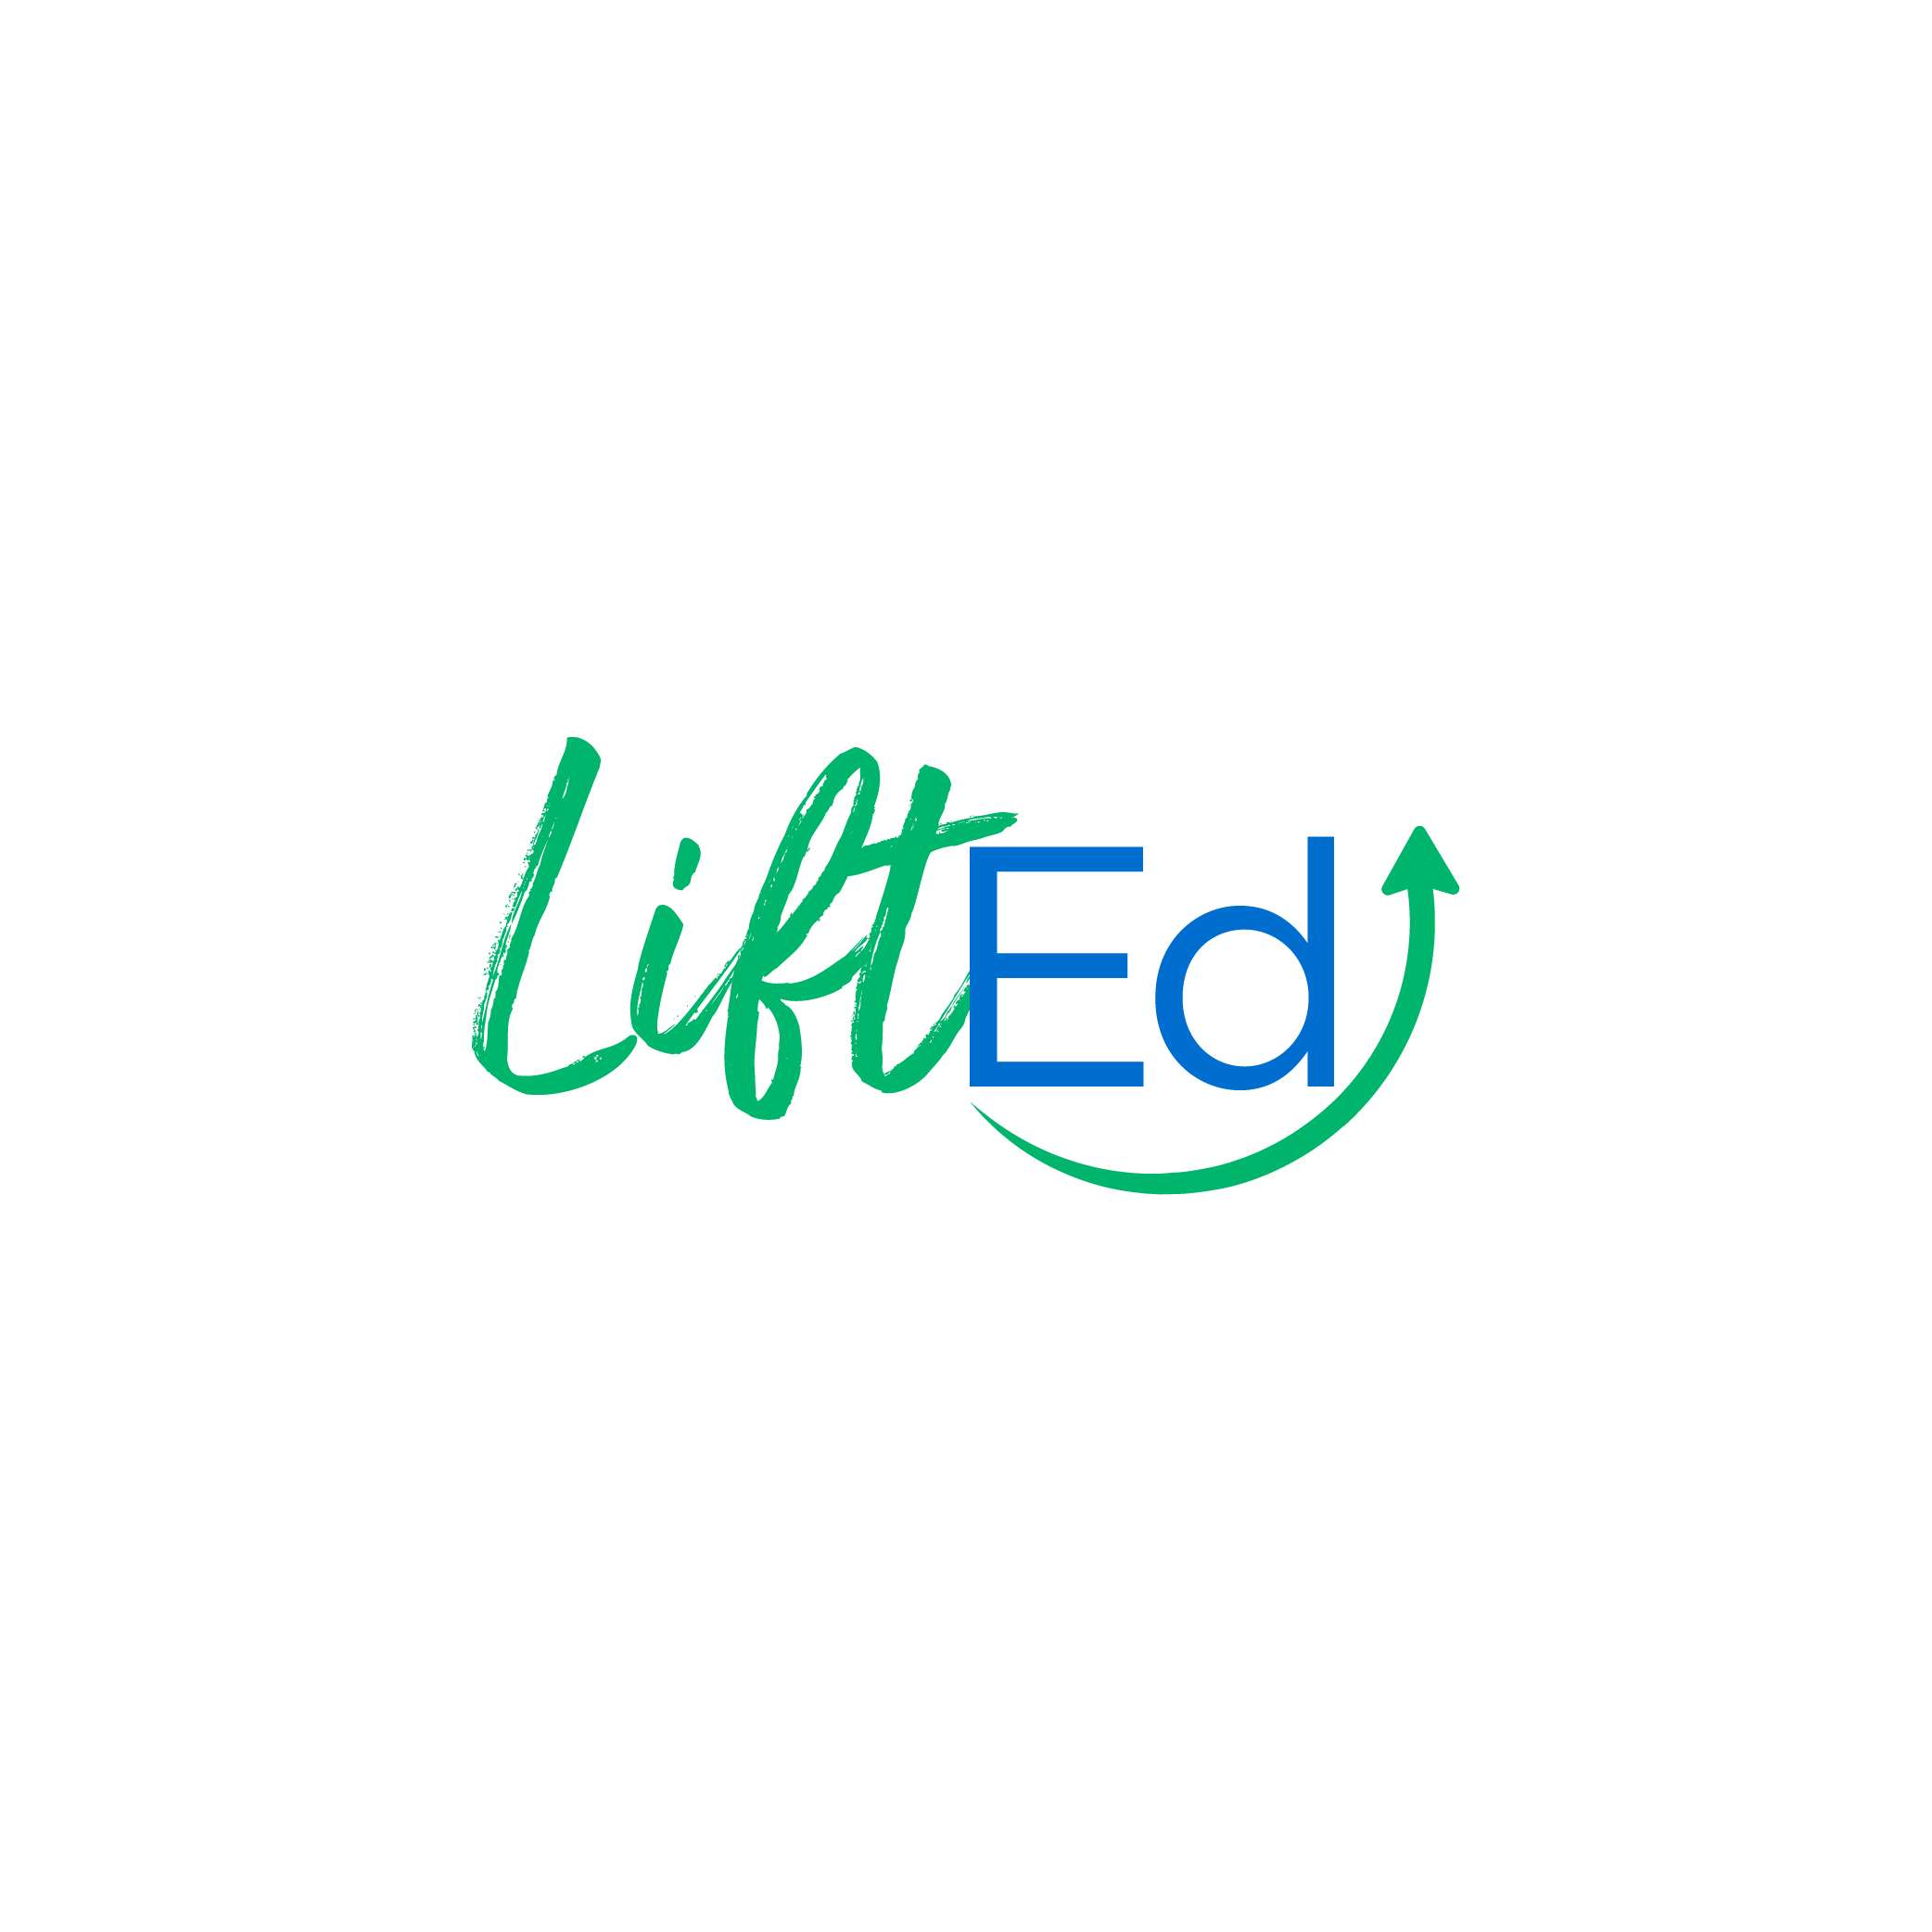 LiftEd logo